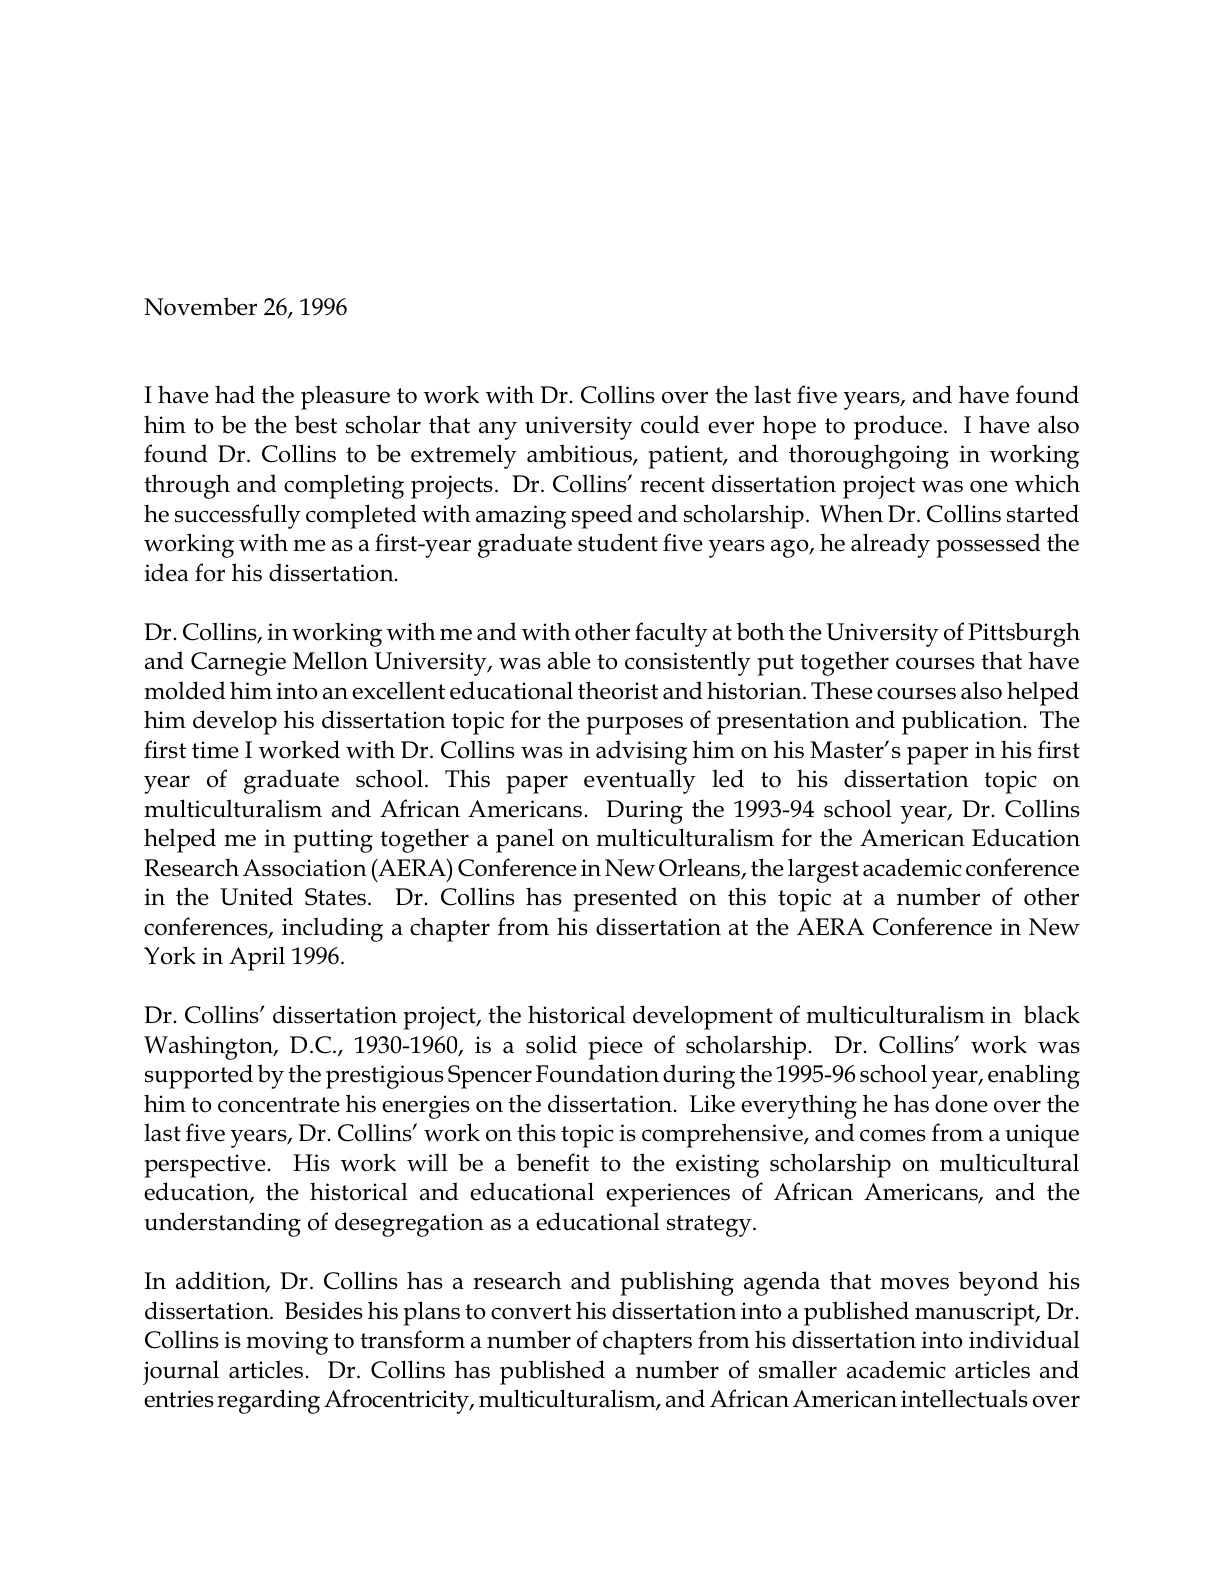 Columbia University Letter Of Recommendation Debandje inside proportions 1224 X 1584